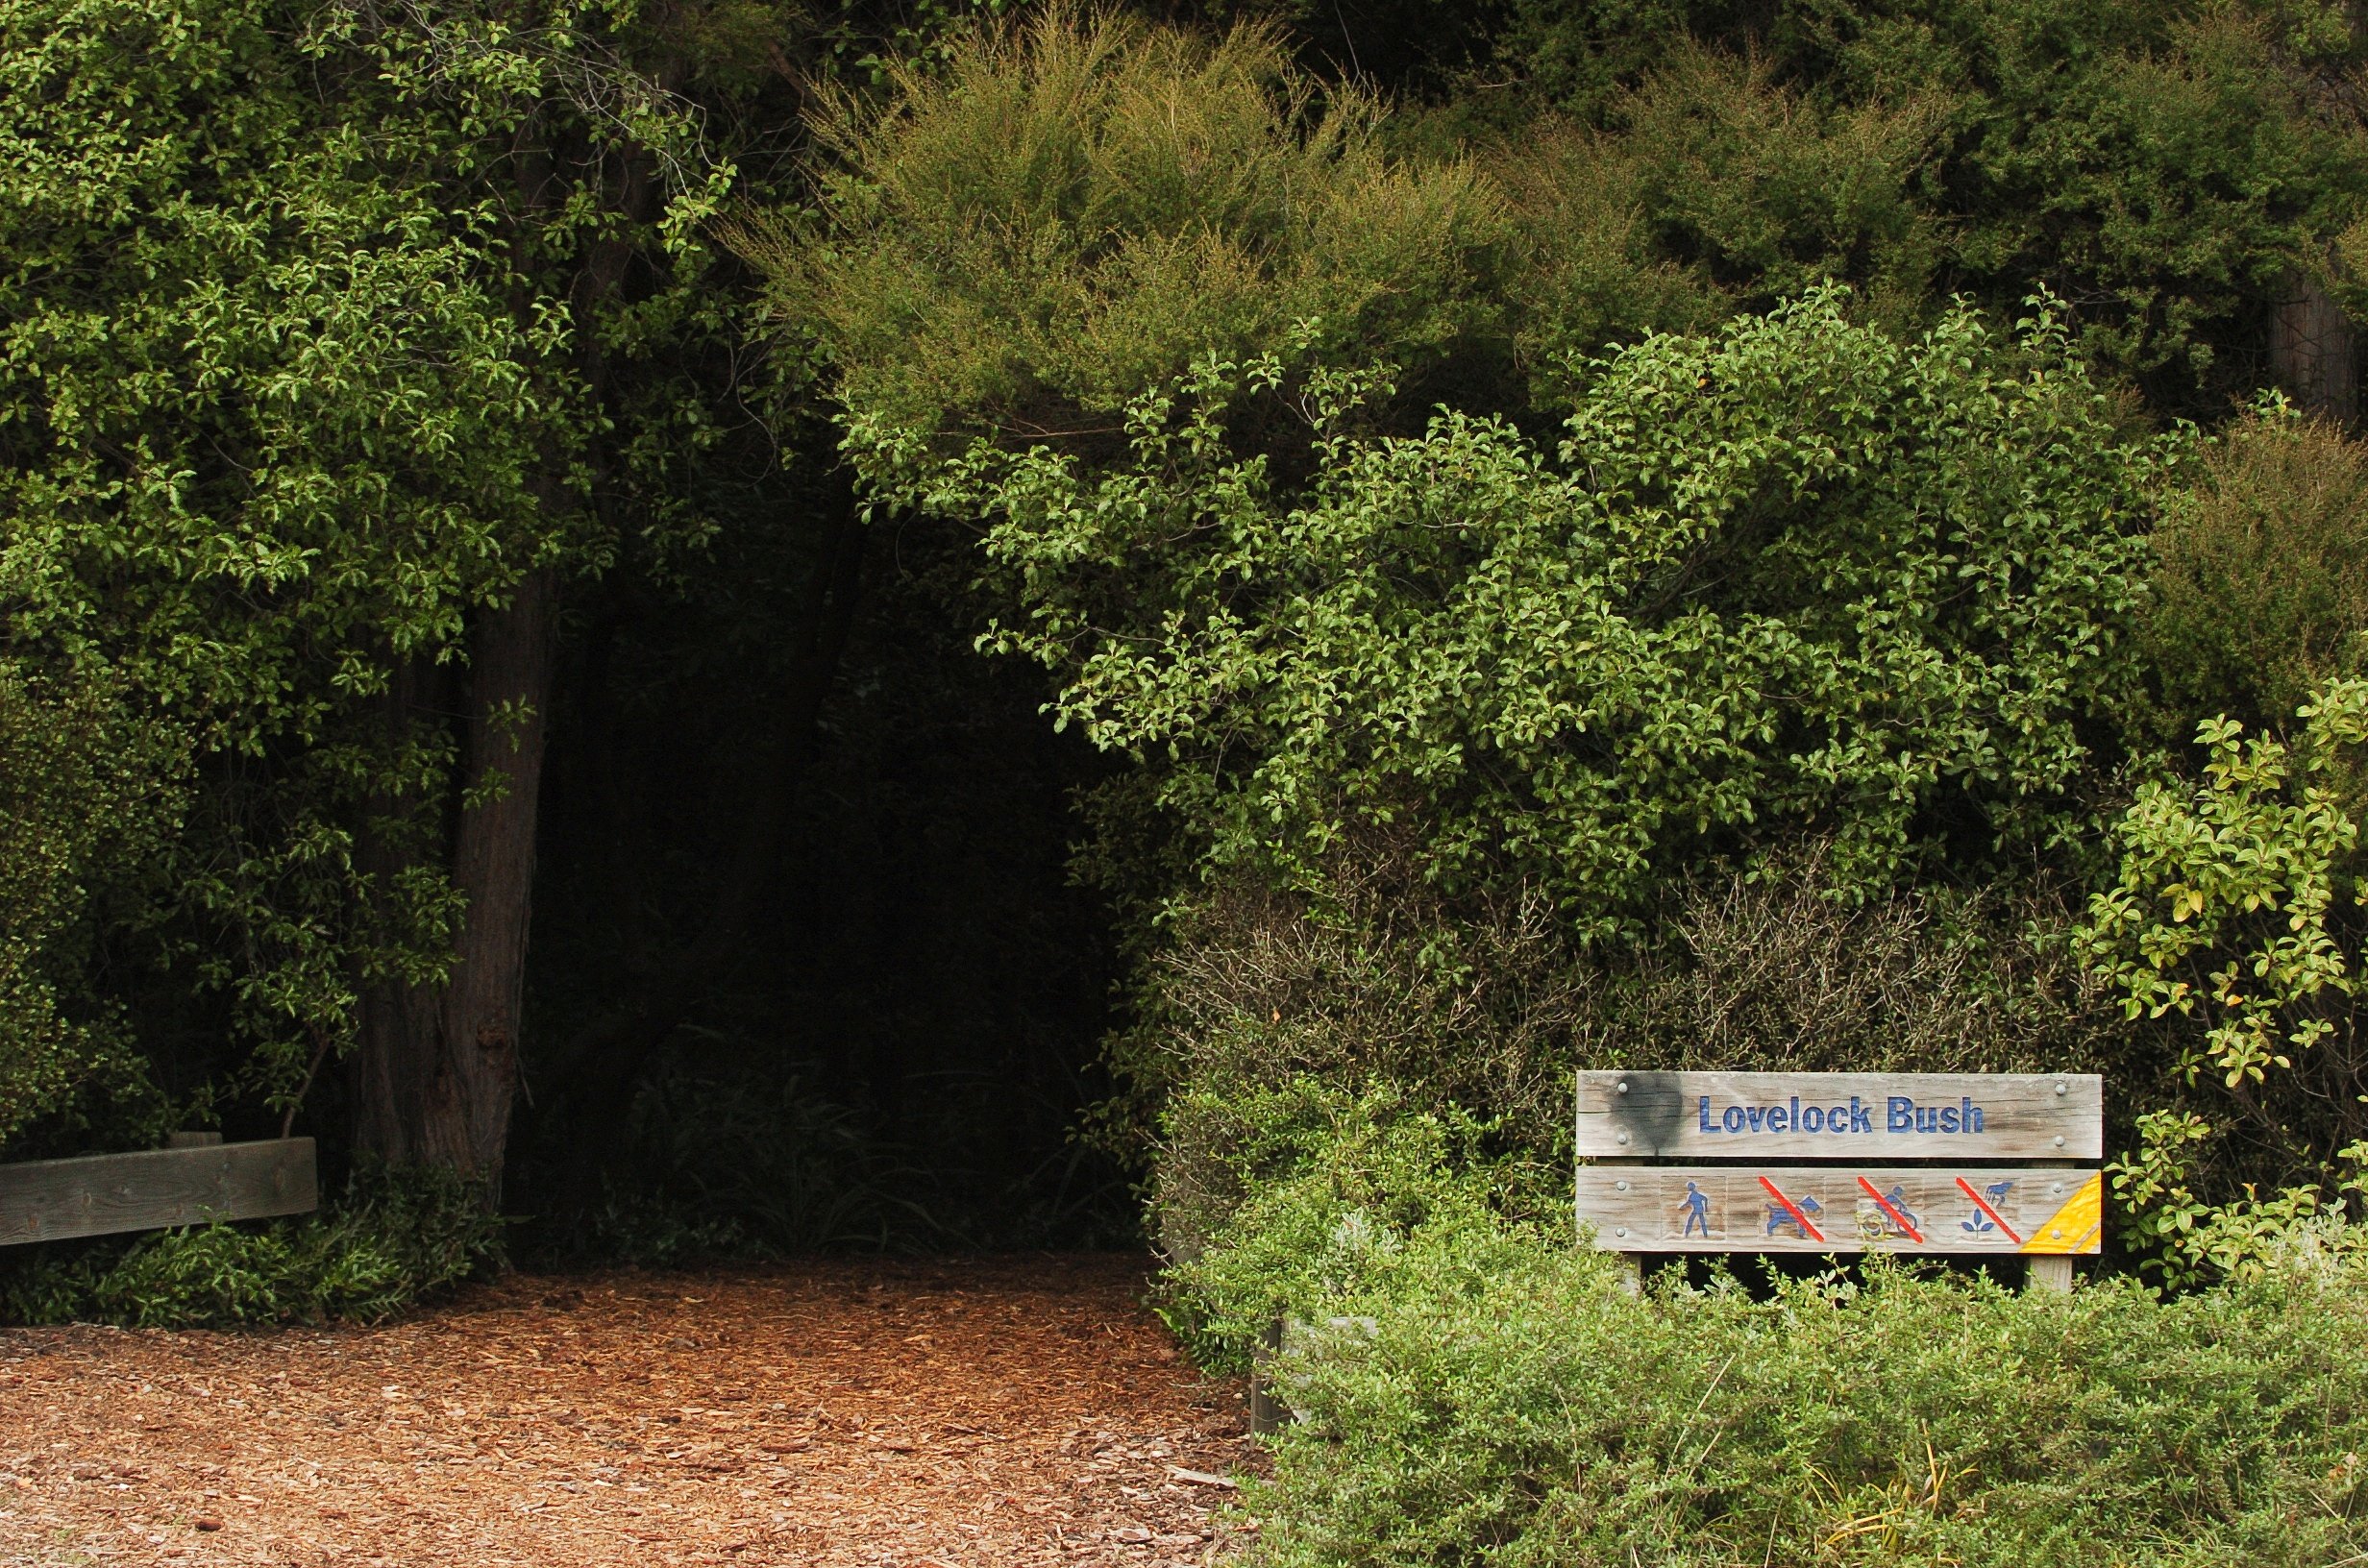 Lovelock Bush at Dunedin Botanic Garden. Photo: Peter McIntosh.